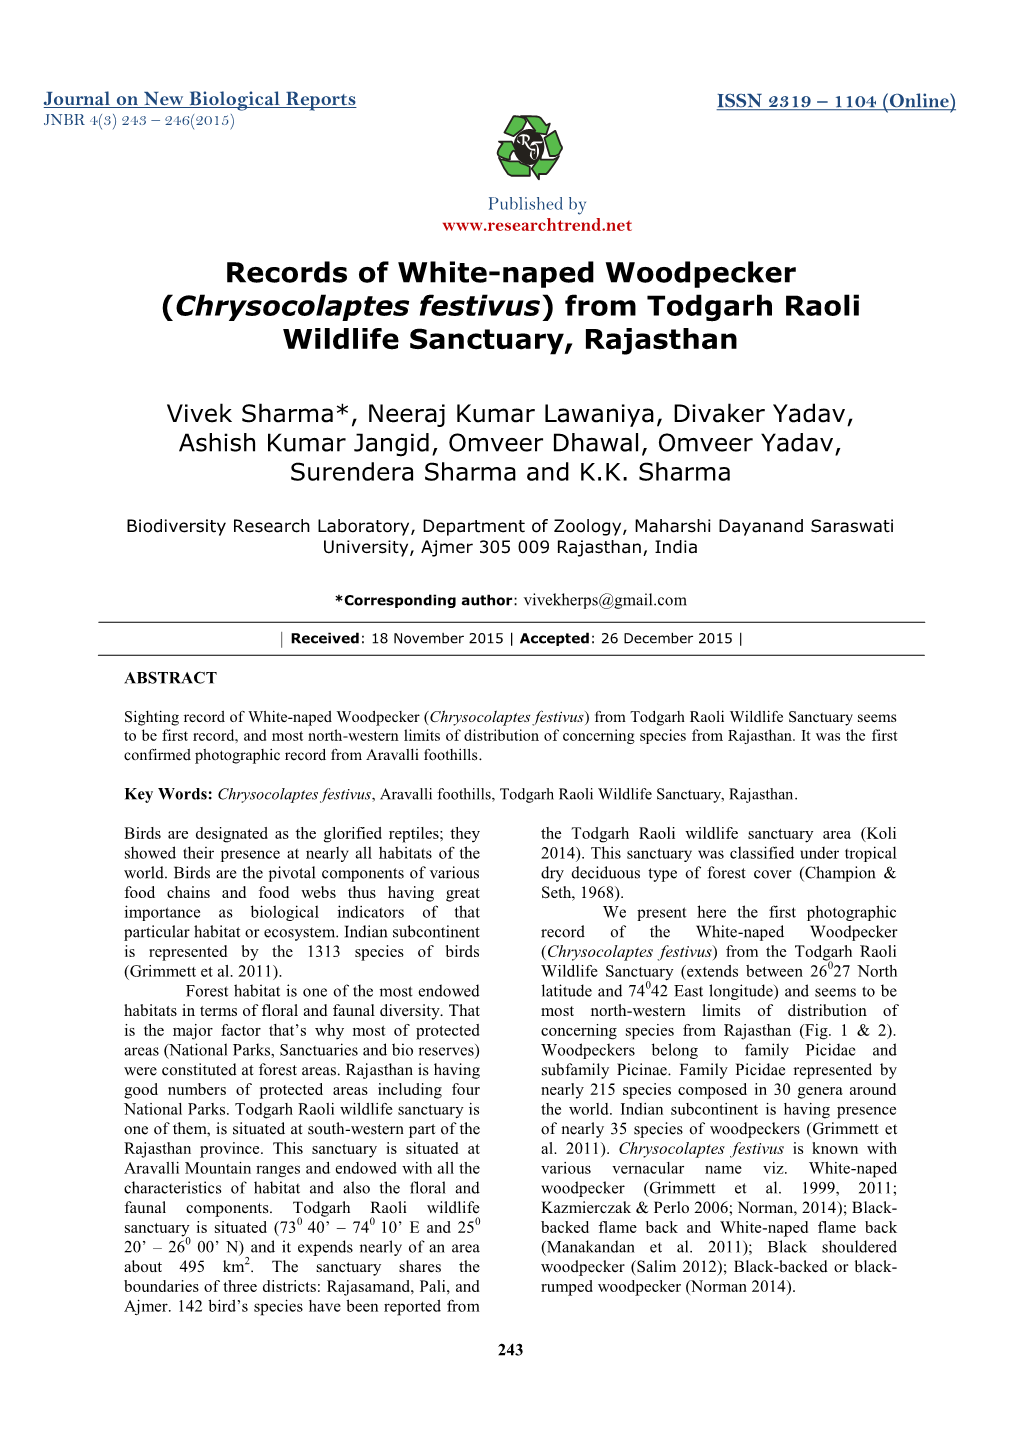 Records of White-Naped Woodpecker (Chrysocolaptes Festivus) from Todgarh Raoli Wildlife Sanctuary, Rajasthan